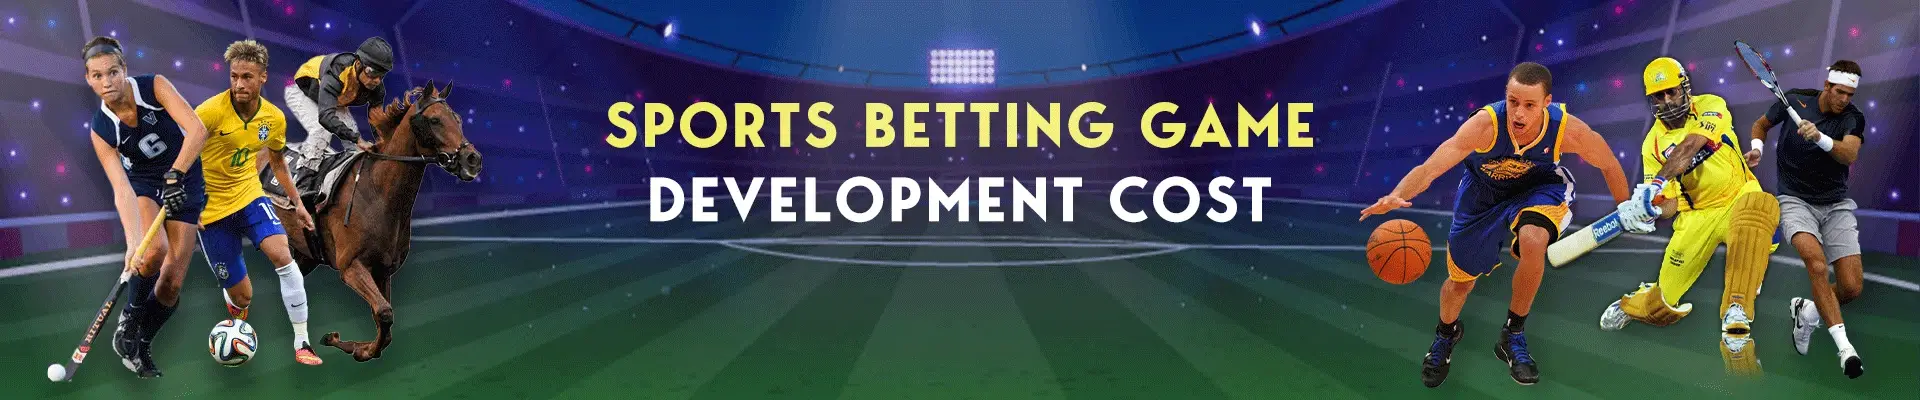 sports betting game development cost